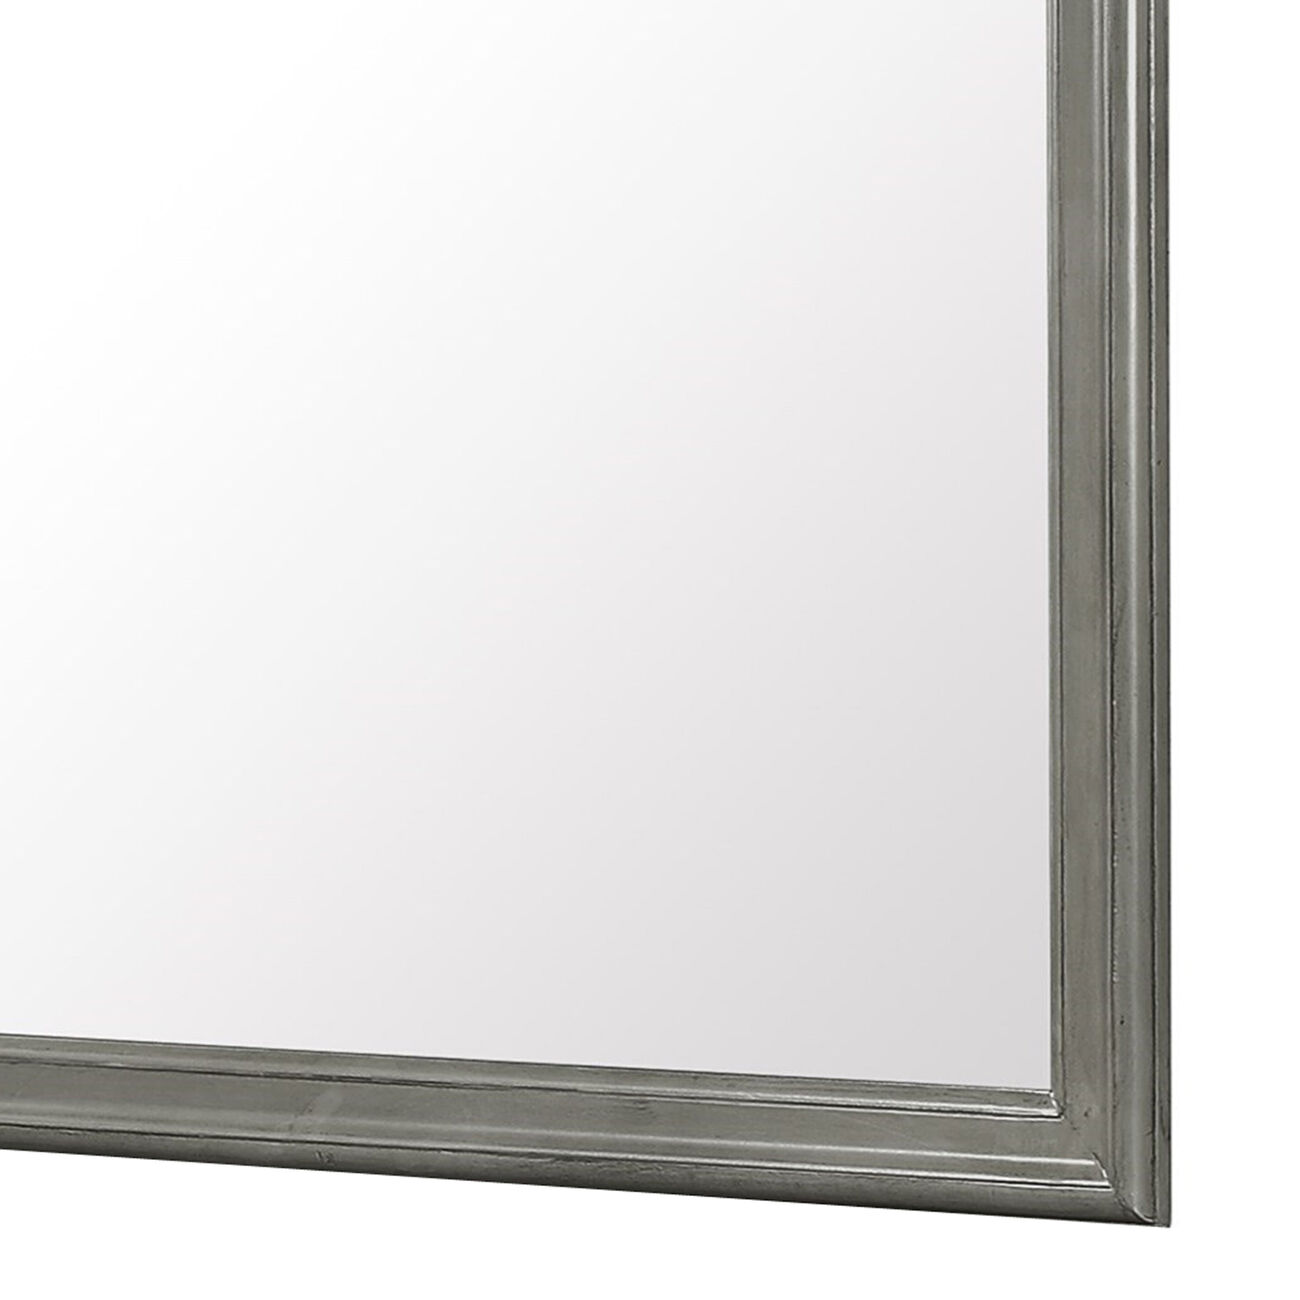 Rectangular Molded Wooden Frame Dresser Top Mirror, Gray and Silver - BM215169